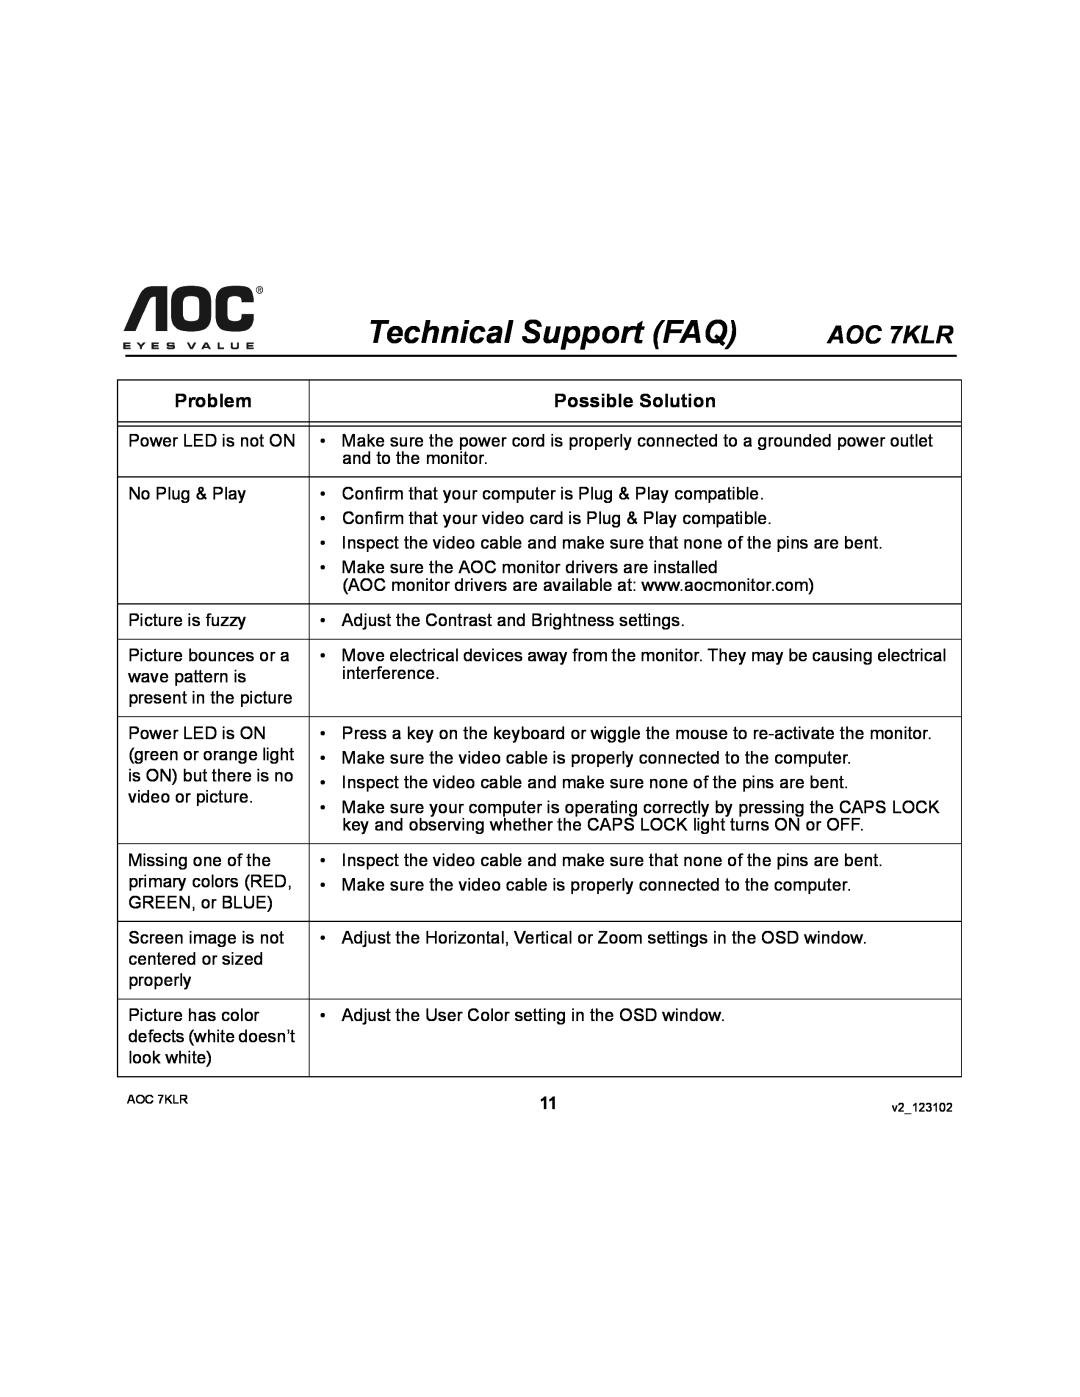 AOC user manual Technical Support FAQ, Problem, Possible Solution, AOC 7KLR 